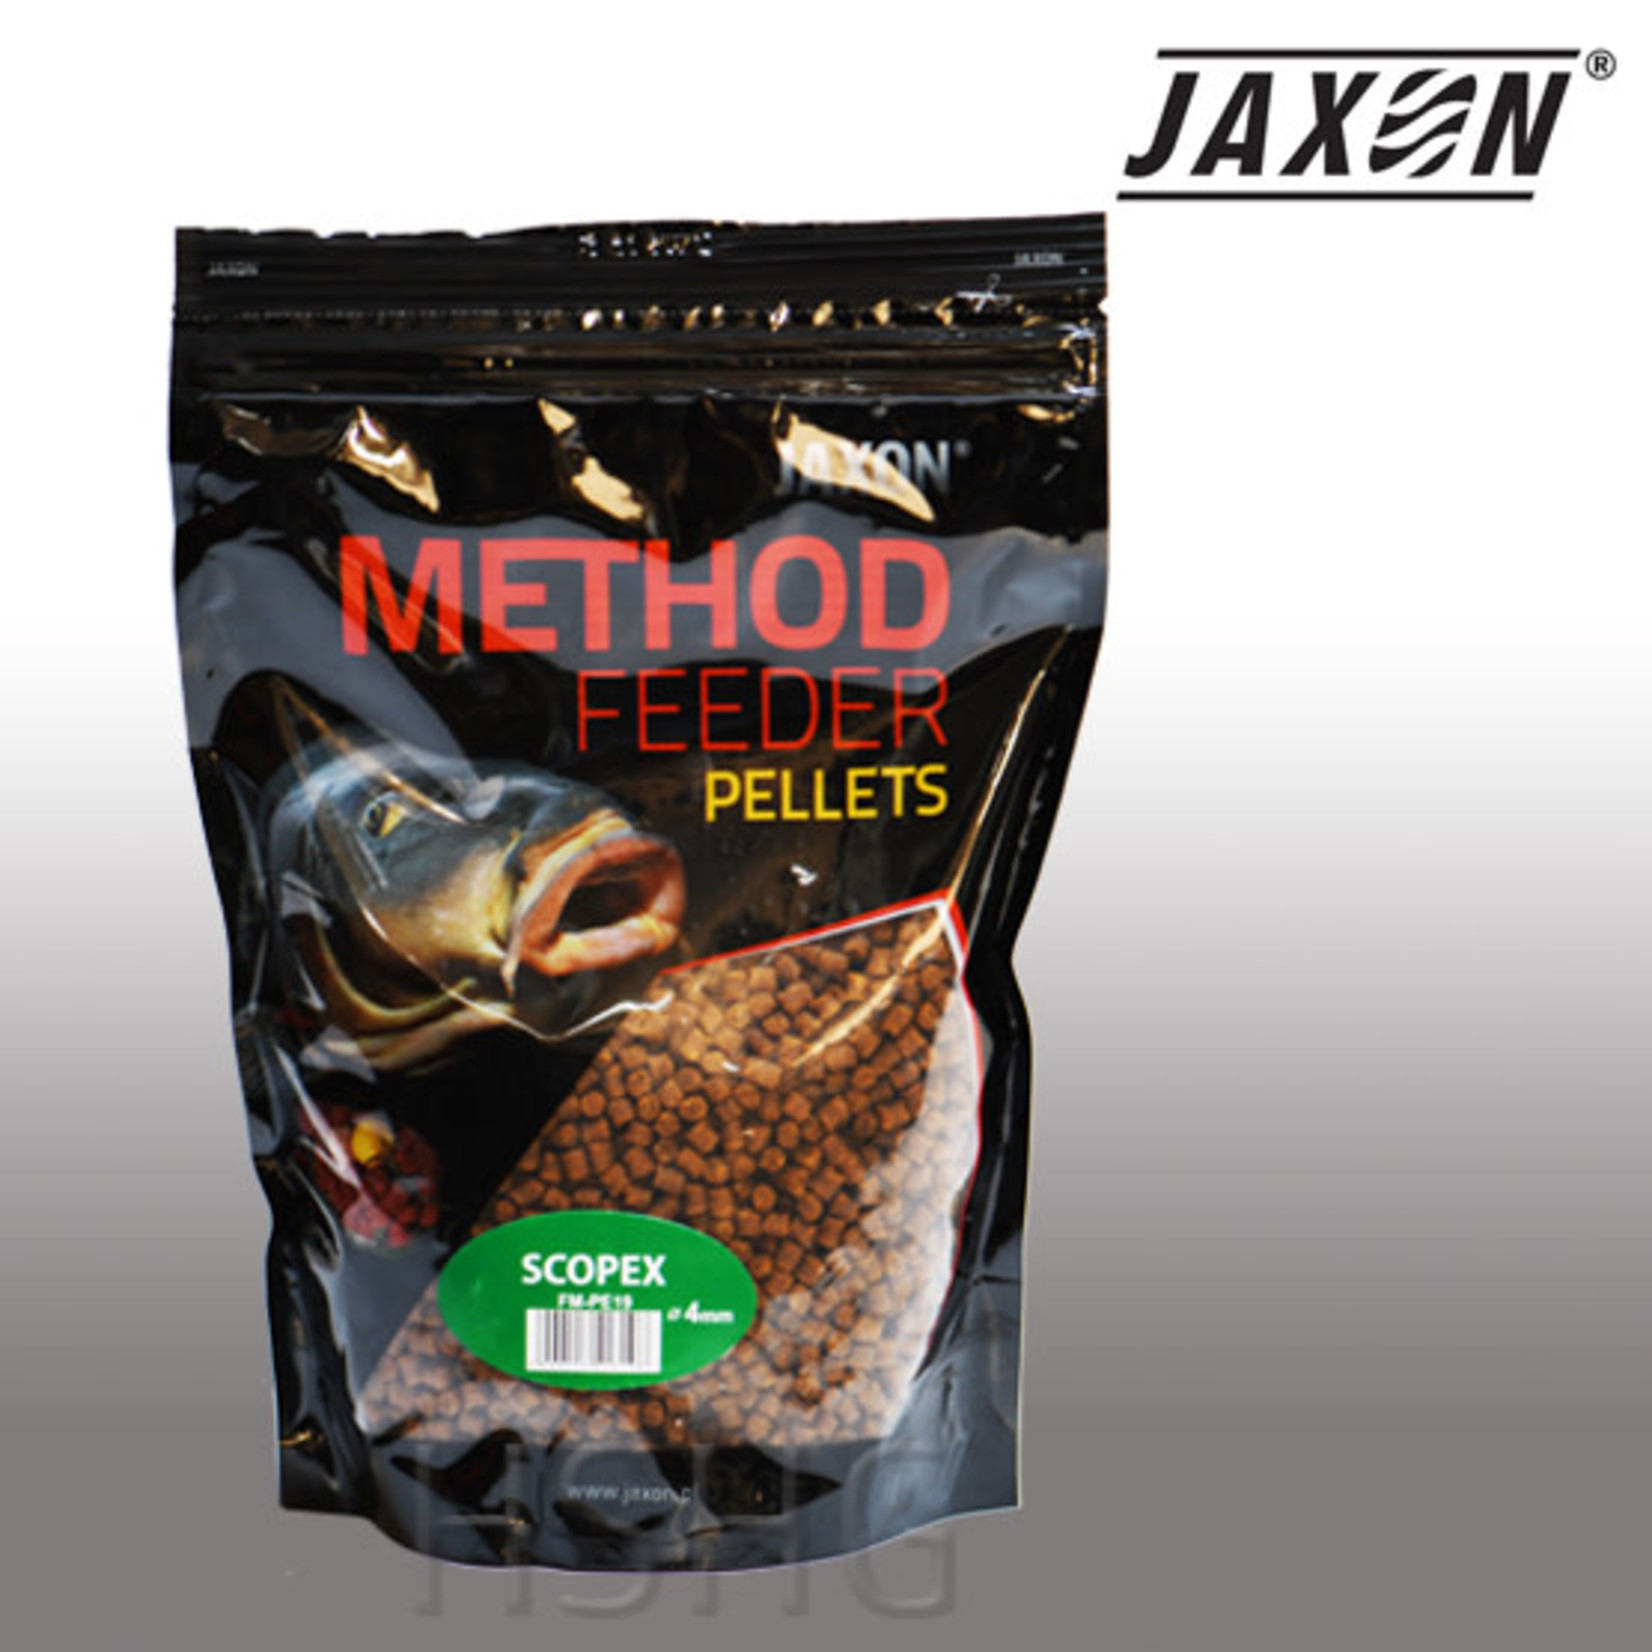 Jaxon Jaxon Method Feeder Pellets  Scopex 2mm